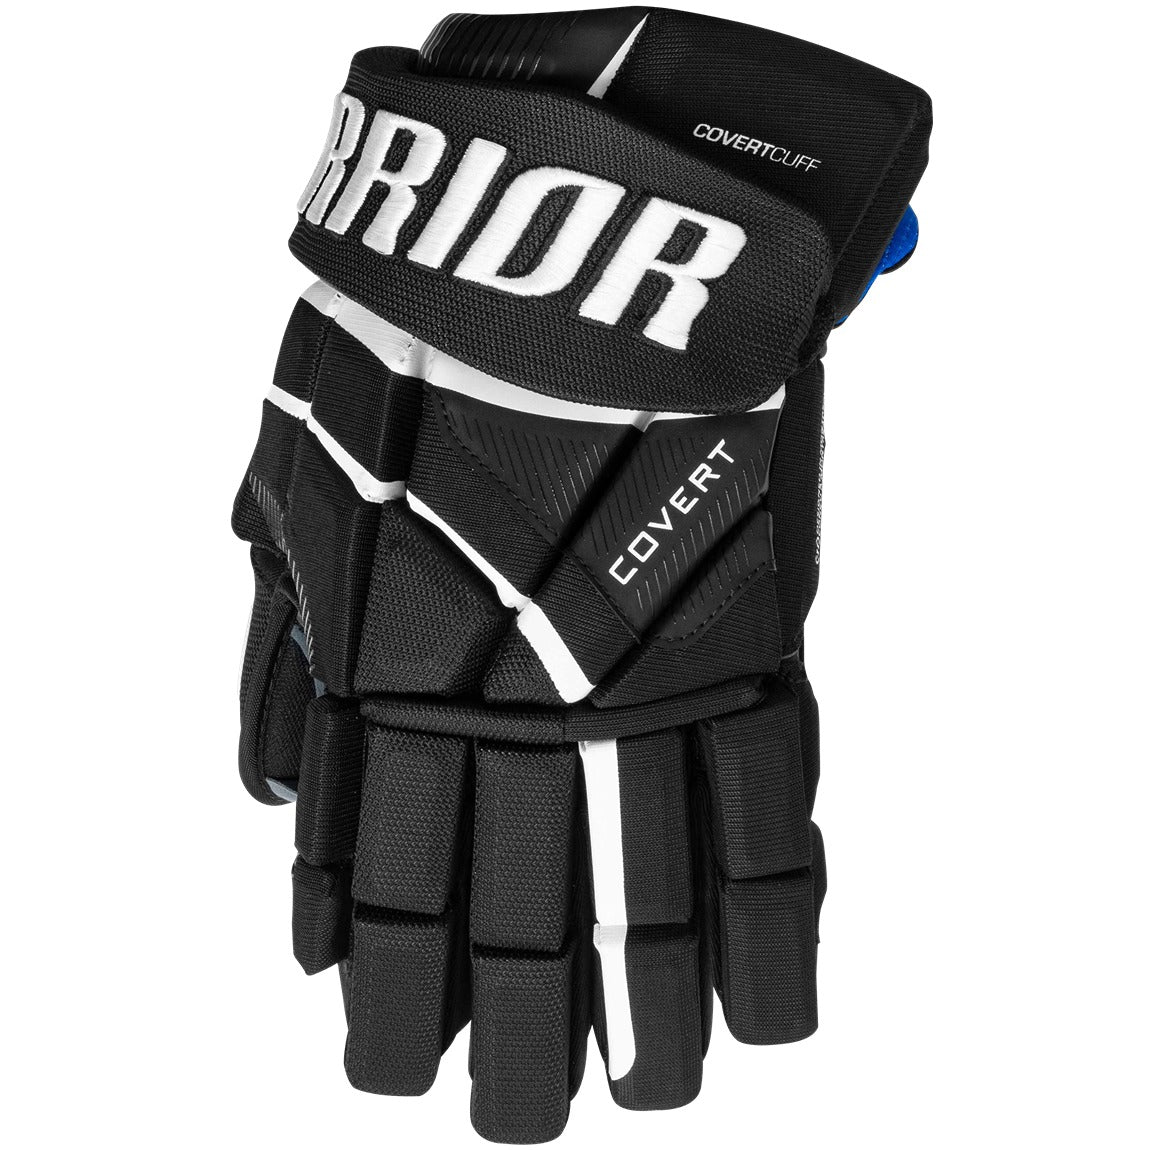 Warrior Covert QR6 Gloves - Junior